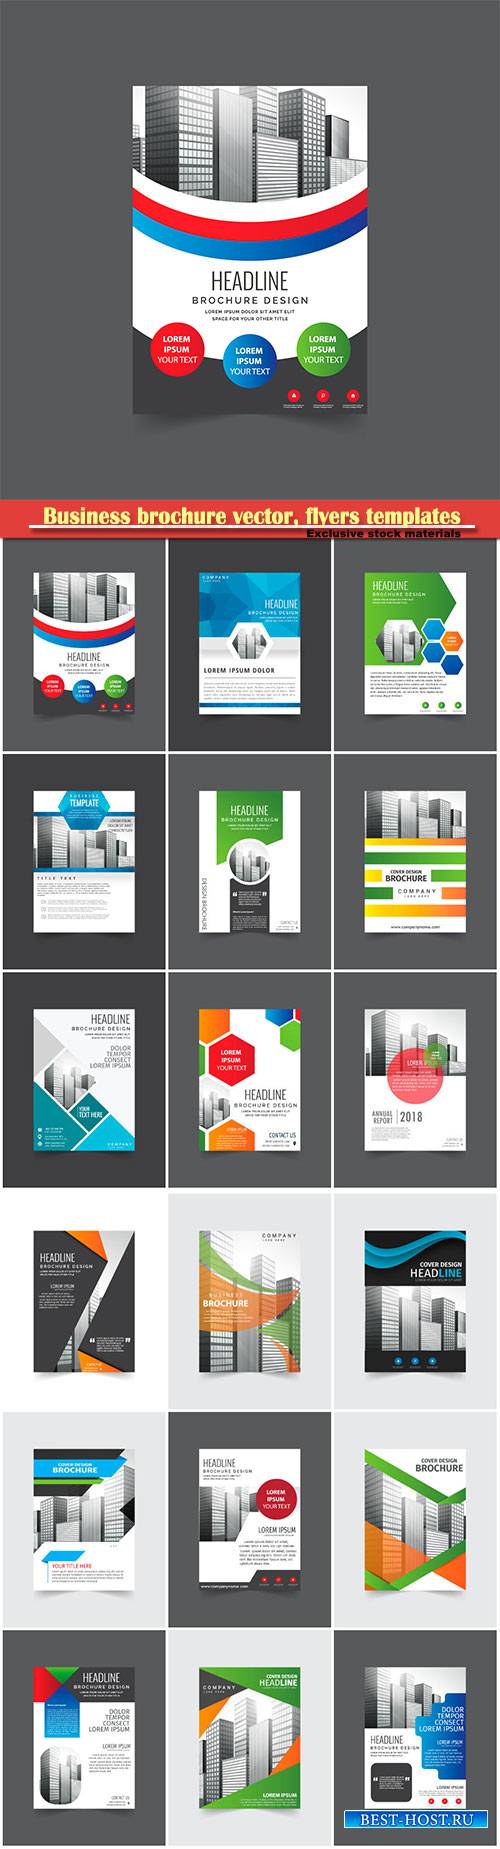 Business brochure vector, flyers templates, report cover design # 101